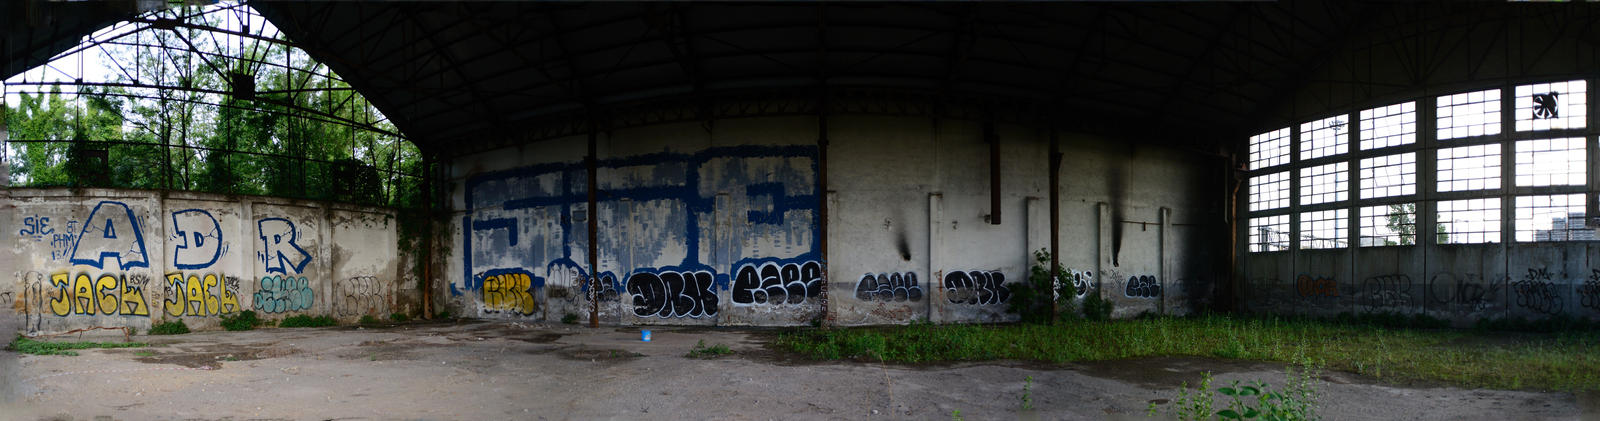 Abandoned warehouse in Milano